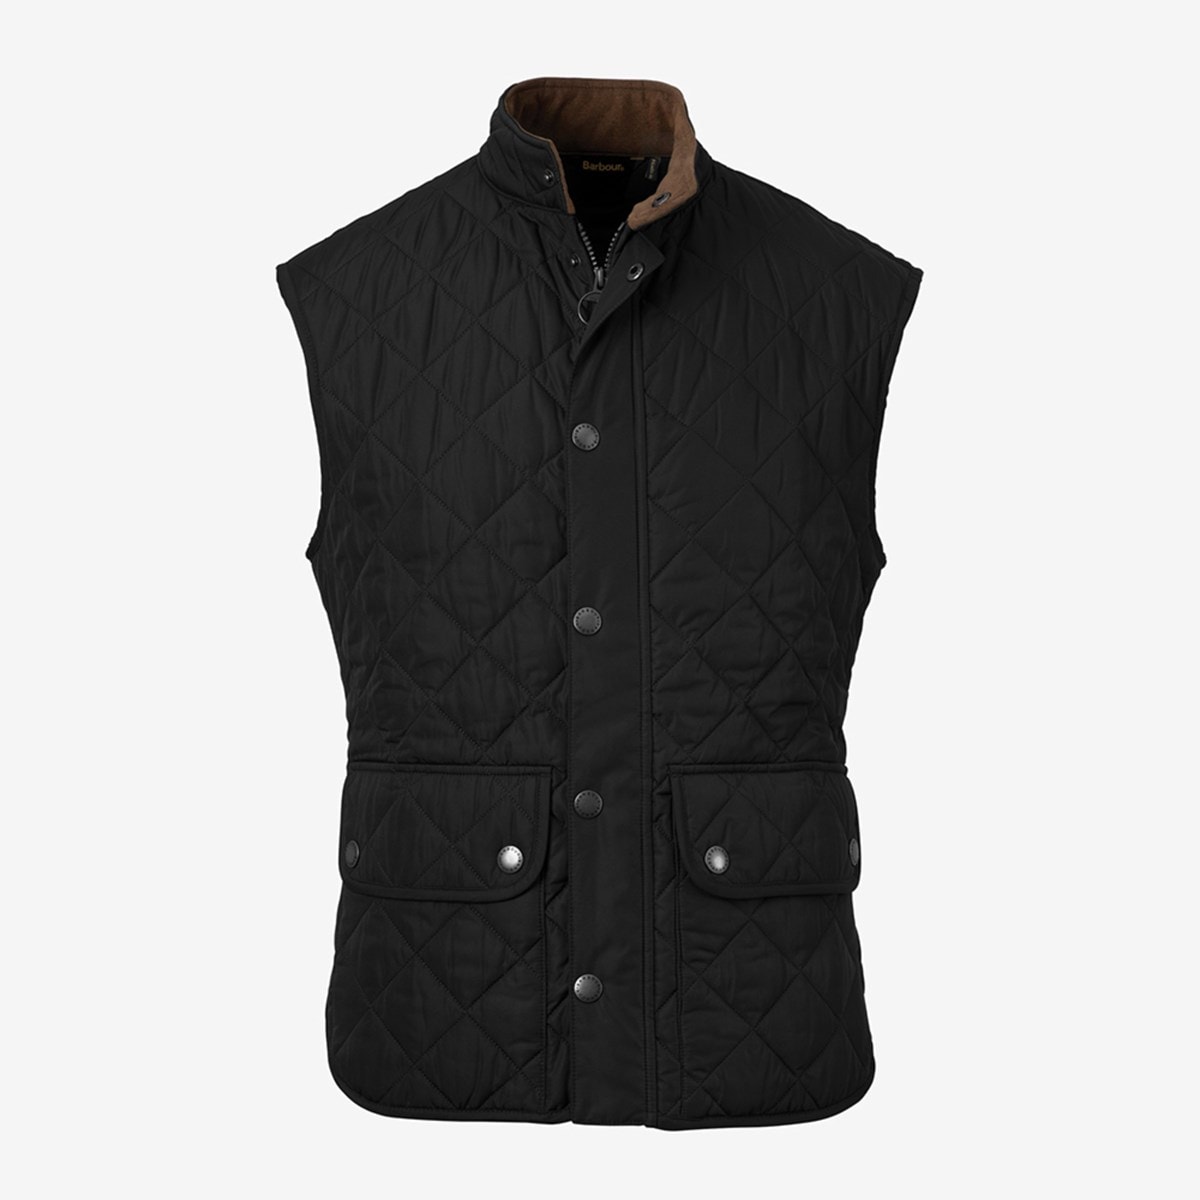 Barbour Lowerdale Gilet Vest | Men's Outerwear | Allen Edmonds